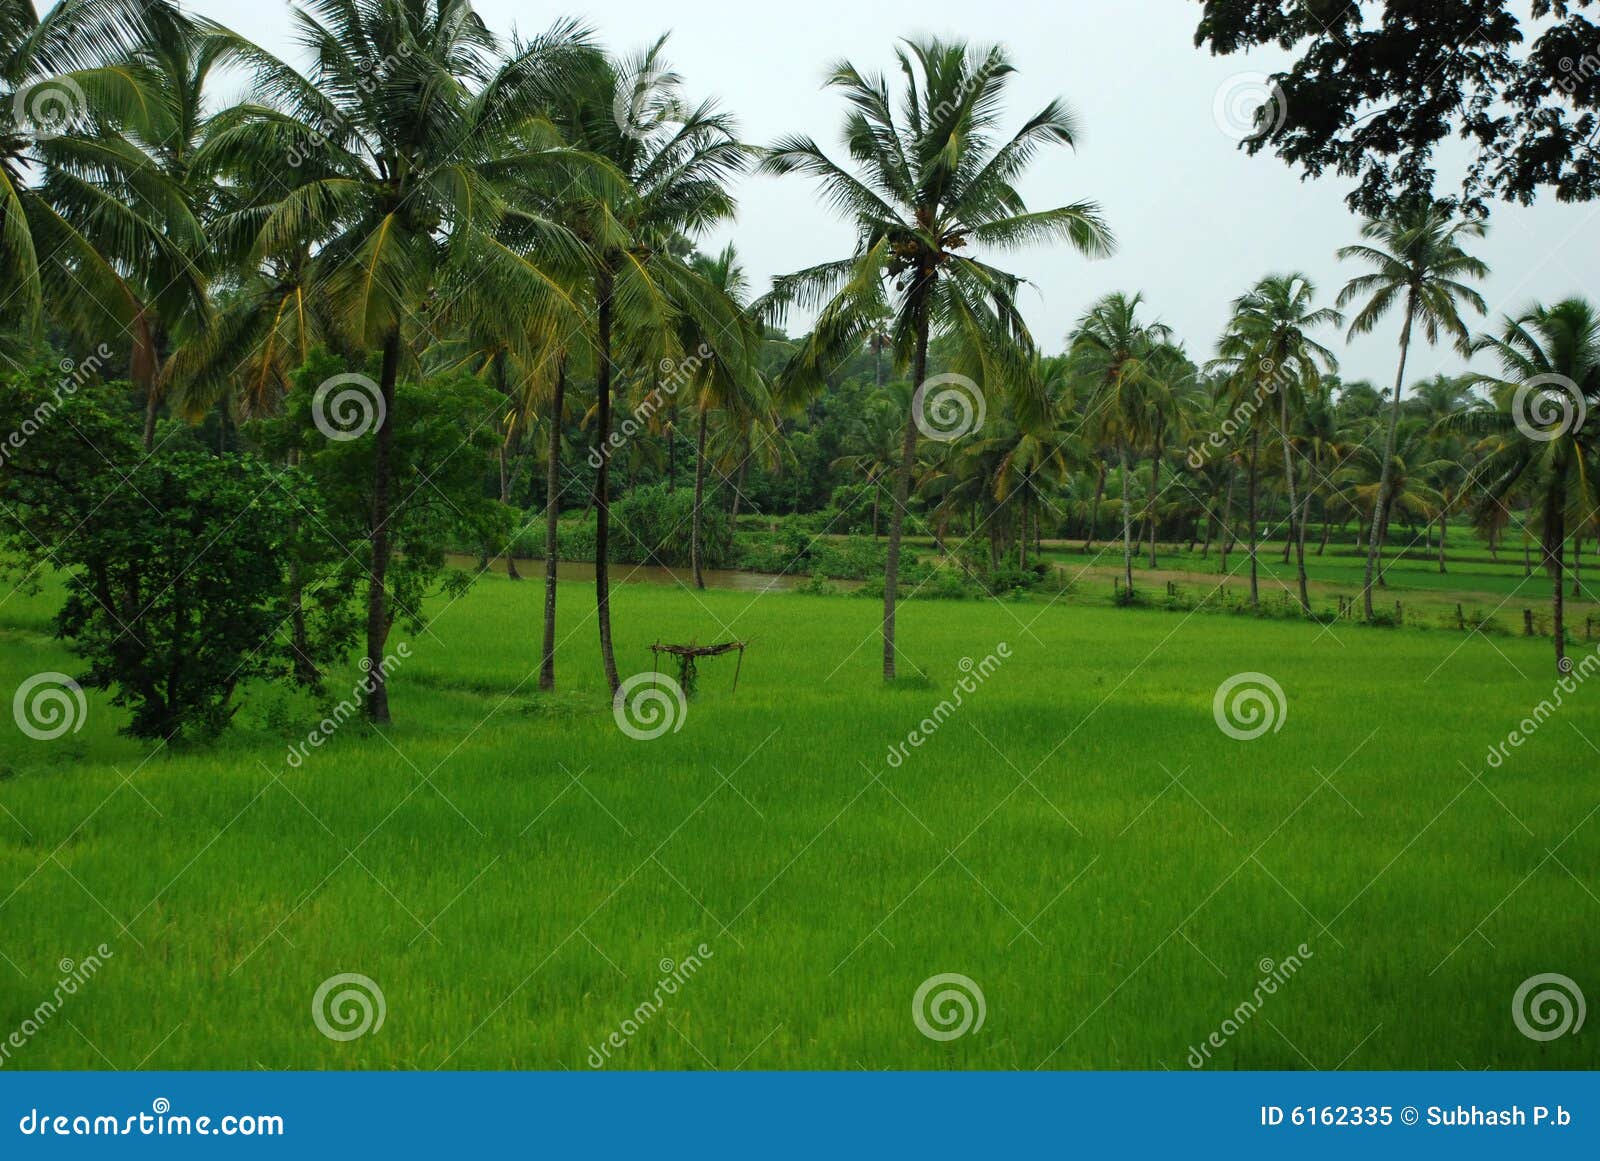 Reispaddyfeld - Landschaft. Ein Ansichtreis-Paddyfeld mit Kokosnussbäumen